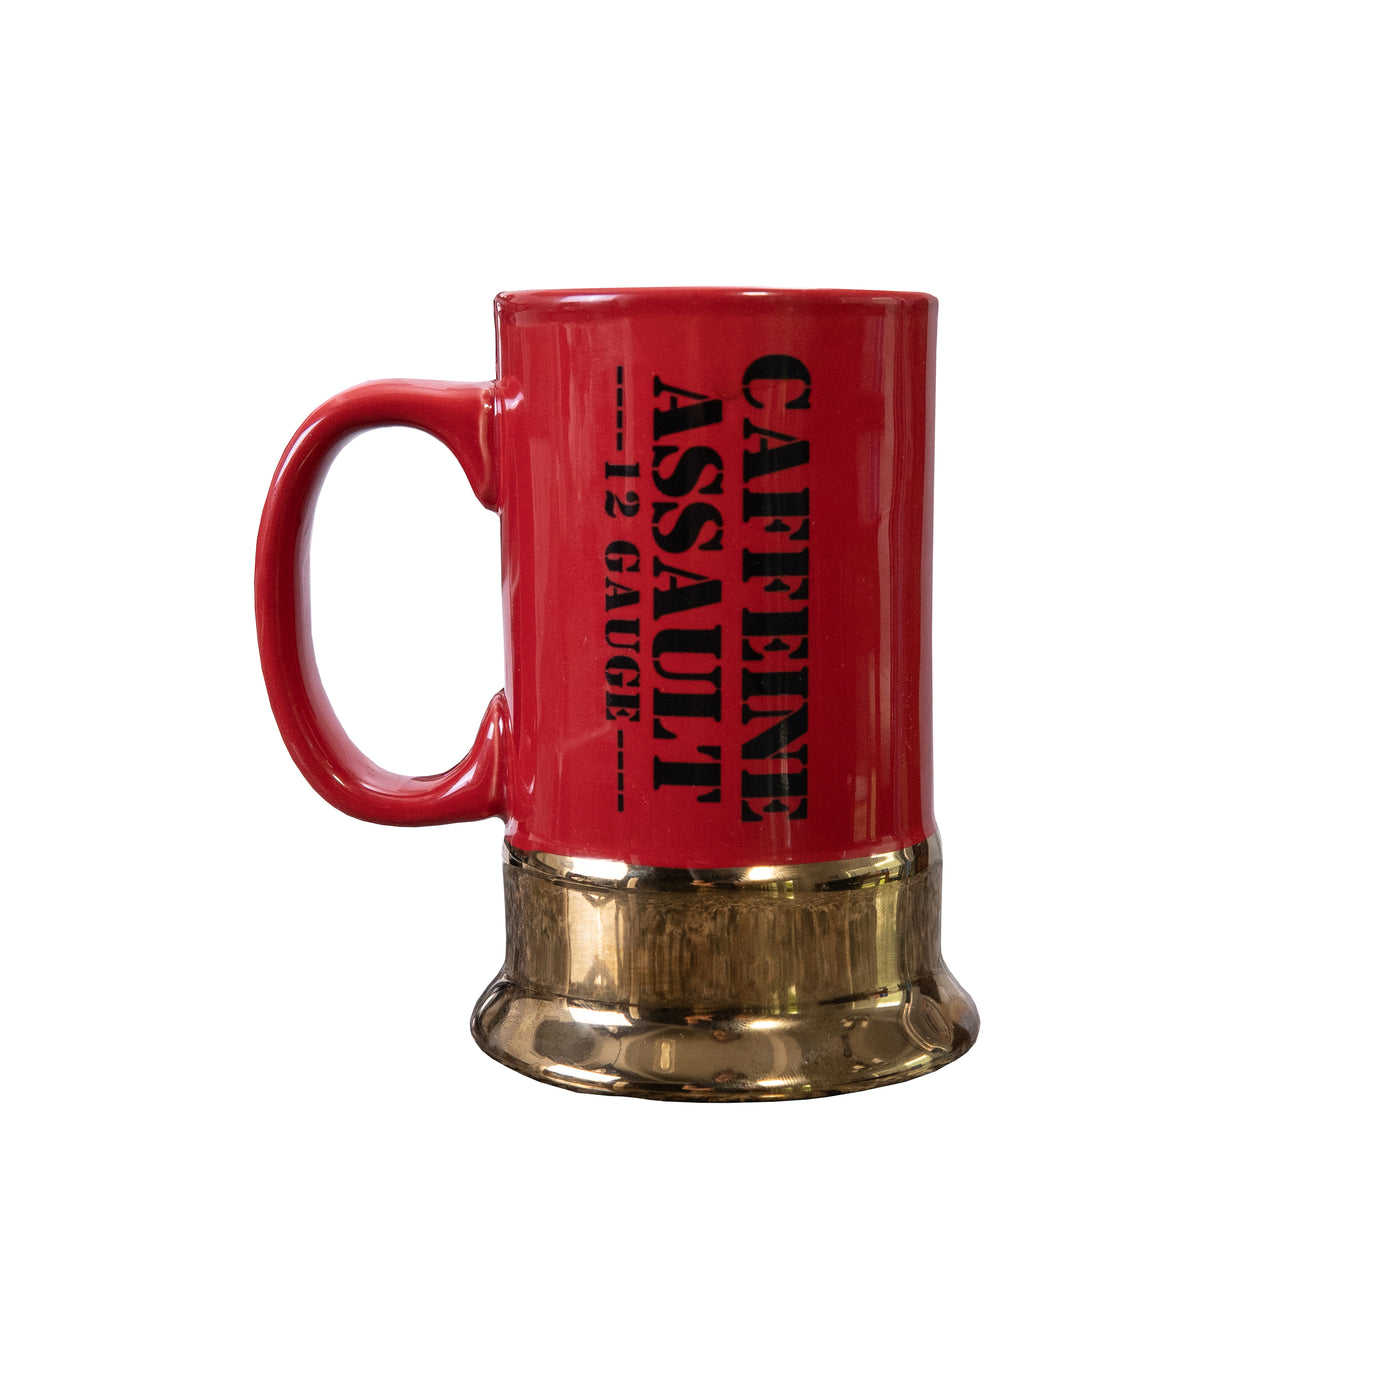 Caffeine Assault Mug / 12 Gauge